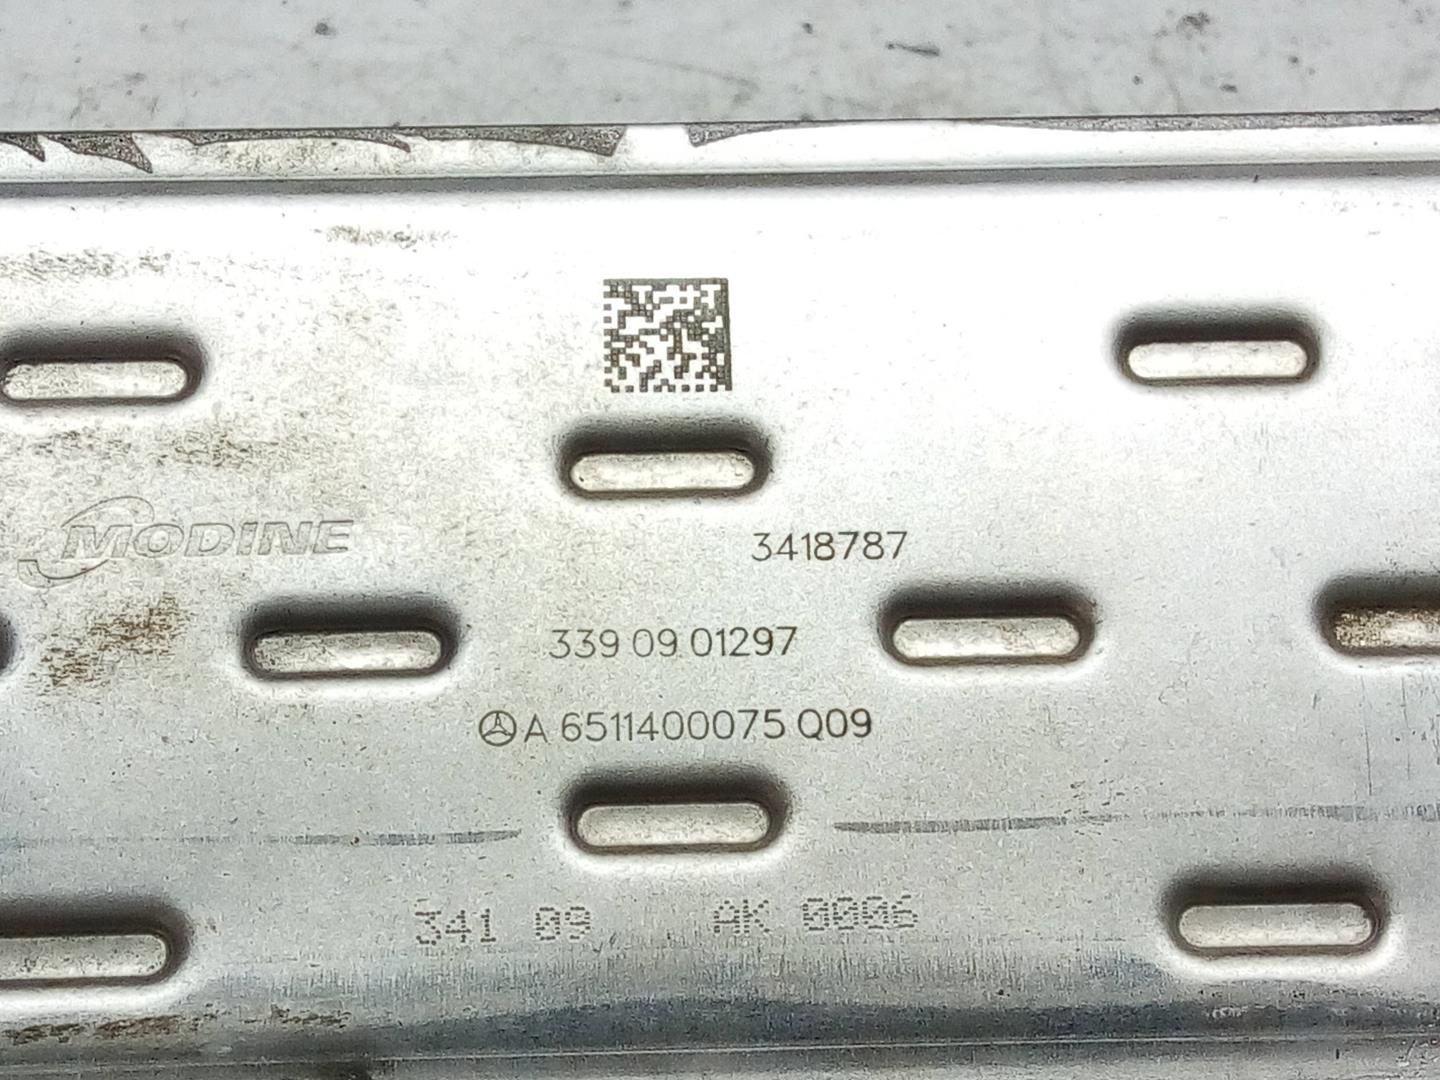 MERCEDES-BENZ Sprinter 2 generation (906) (2006-2018) EGR aušintuvas A6511400075Q09, 33909012973148787 24010594